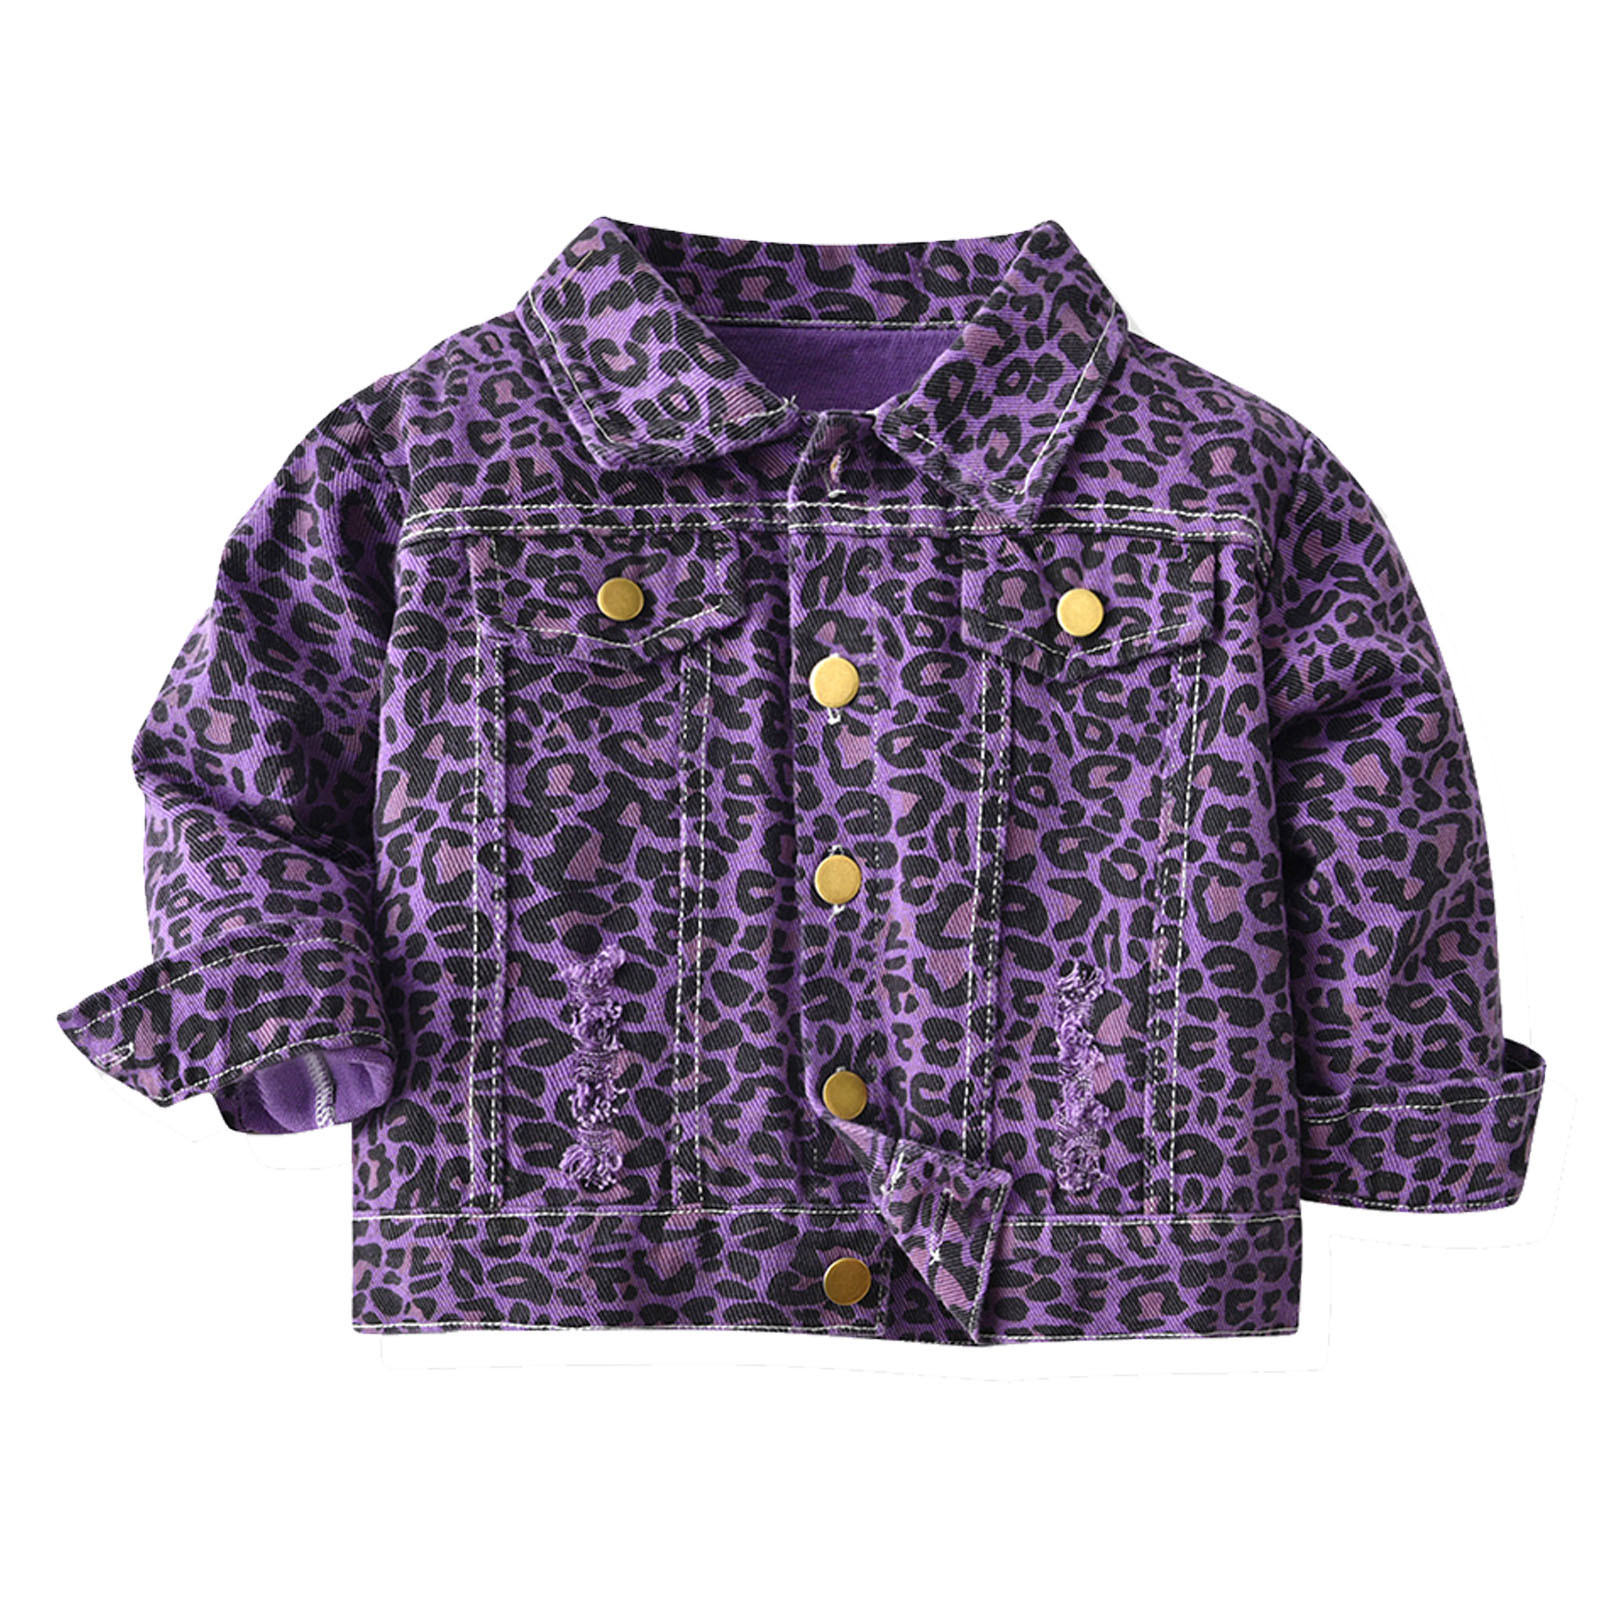 Dadaria Toddler Jacket 3Months-6Years Fashion Kids Coat Boys Girls Thick Coat Denim Print Jacket Clothes Children's Jacket Purple 5-6 Years,Toddler - image 1 of 9